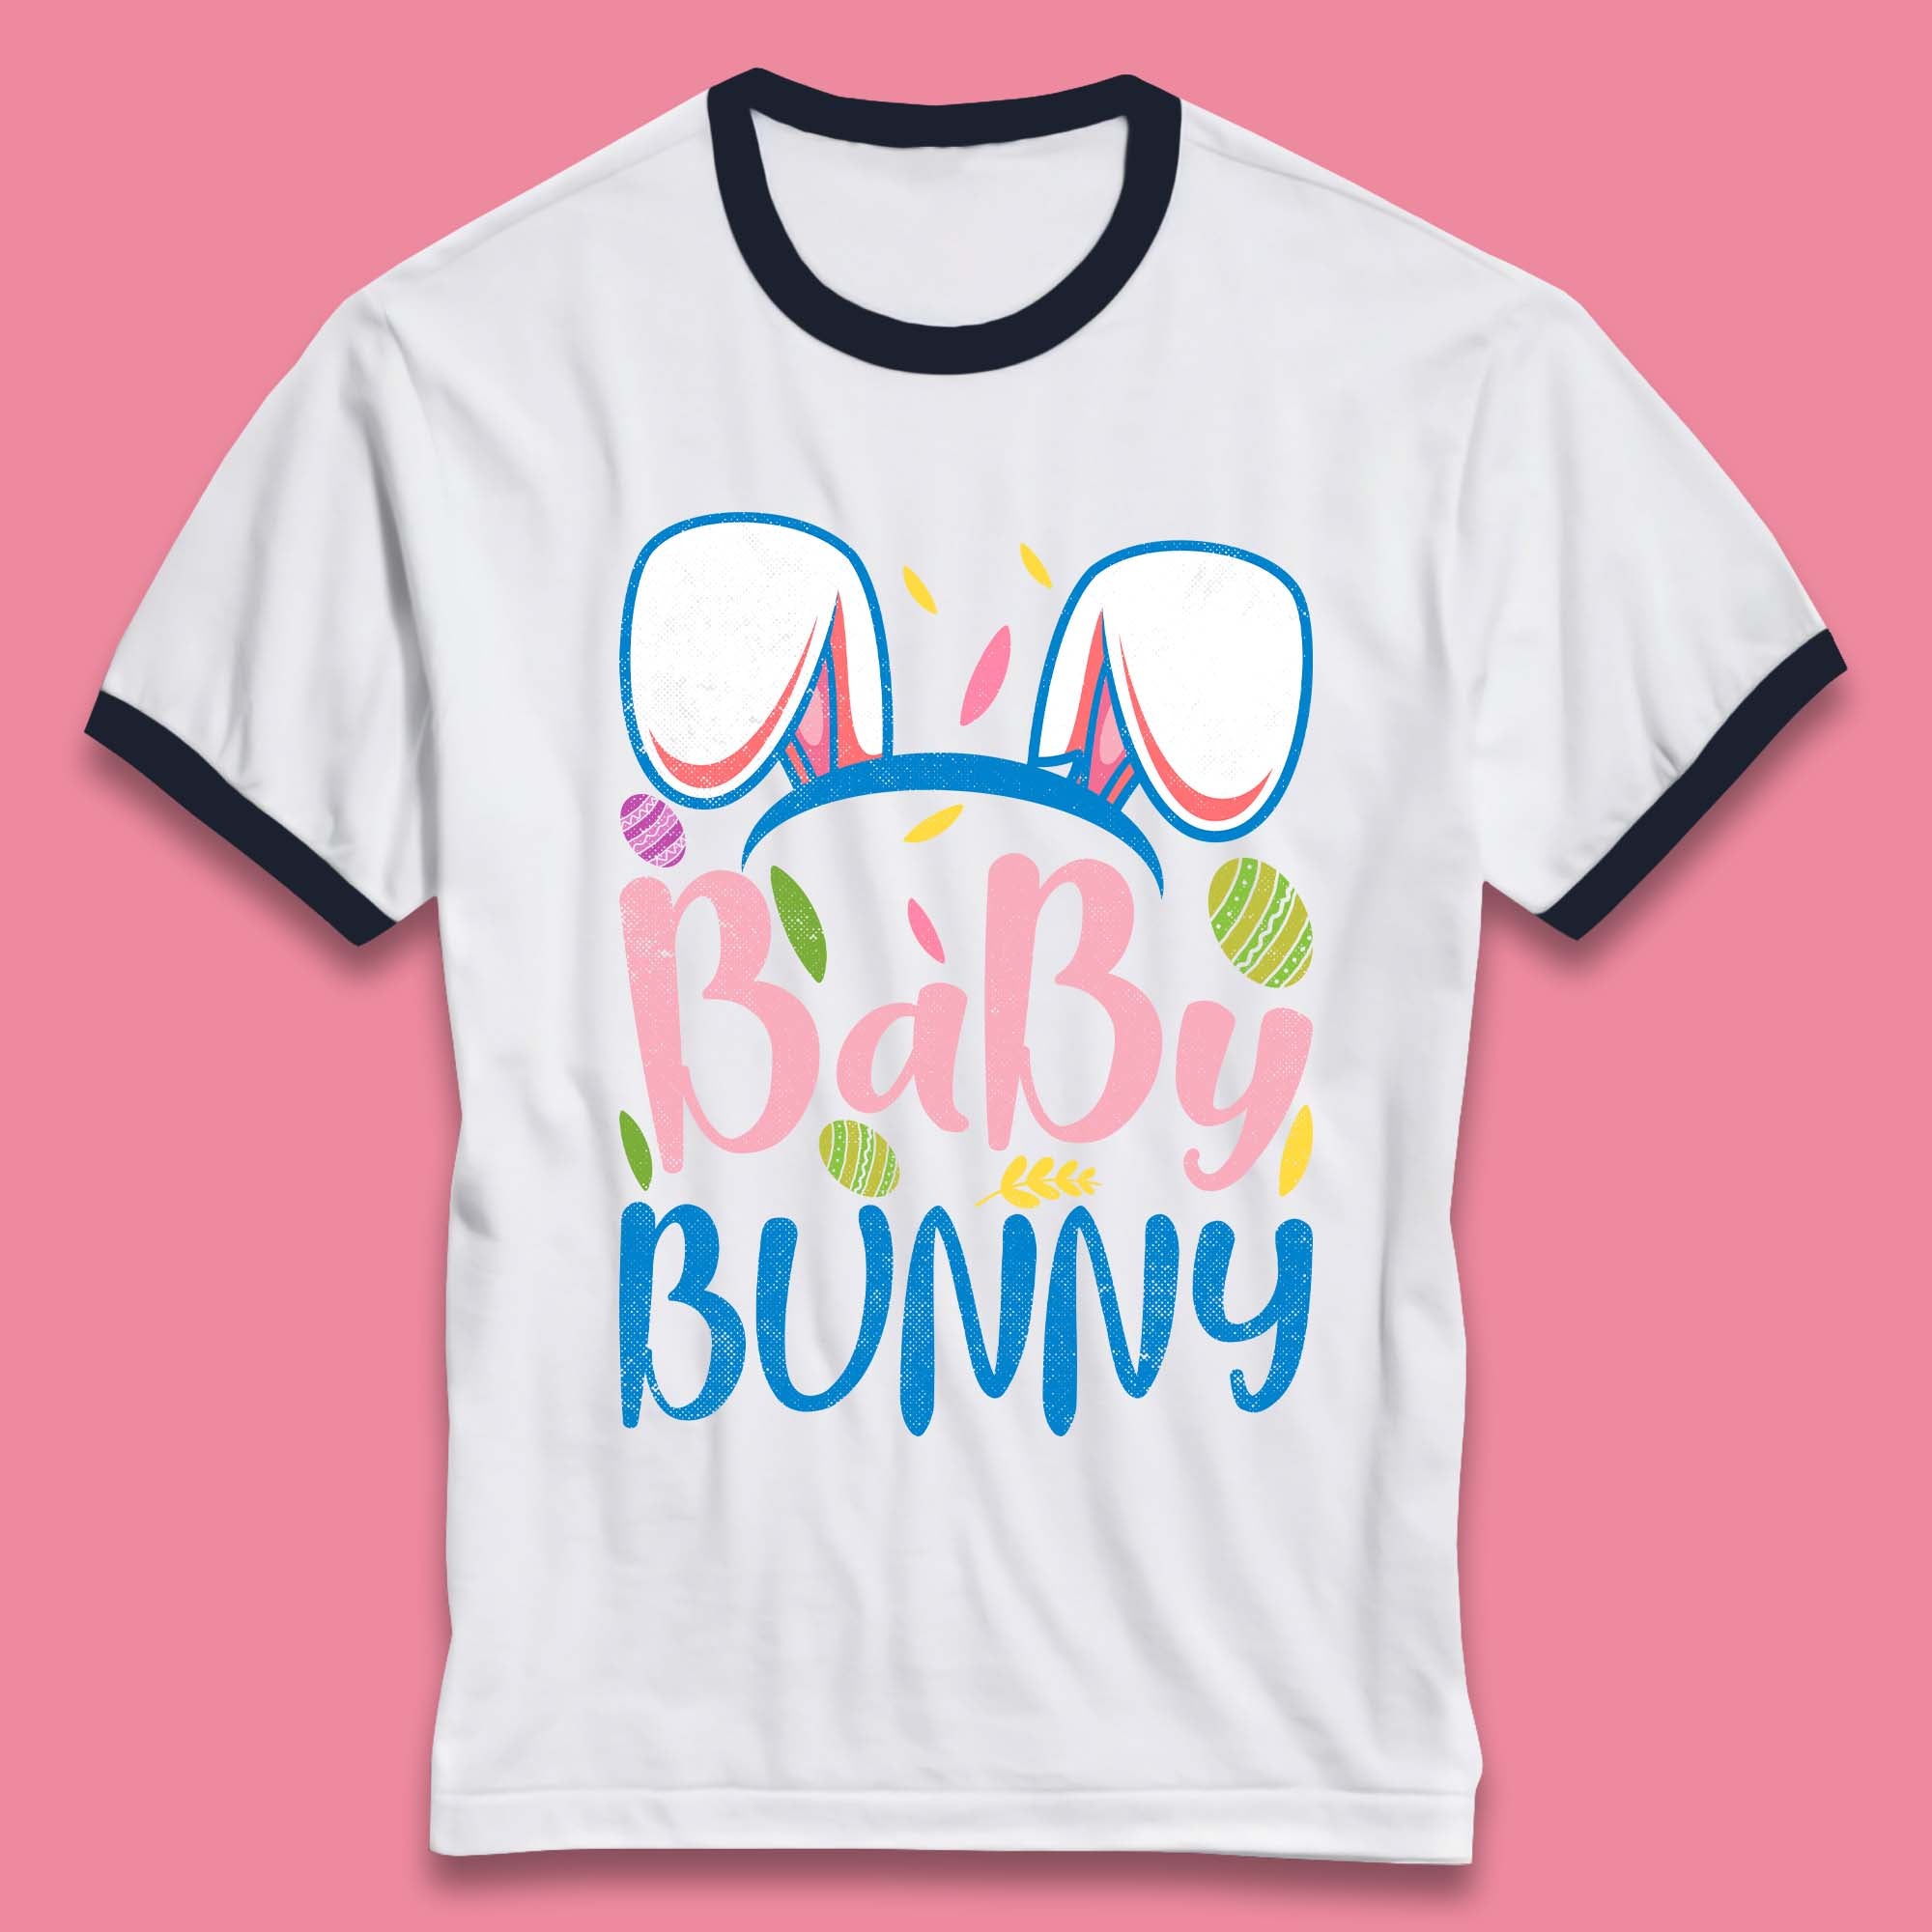 Baby Bunny Ringer T-Shirt